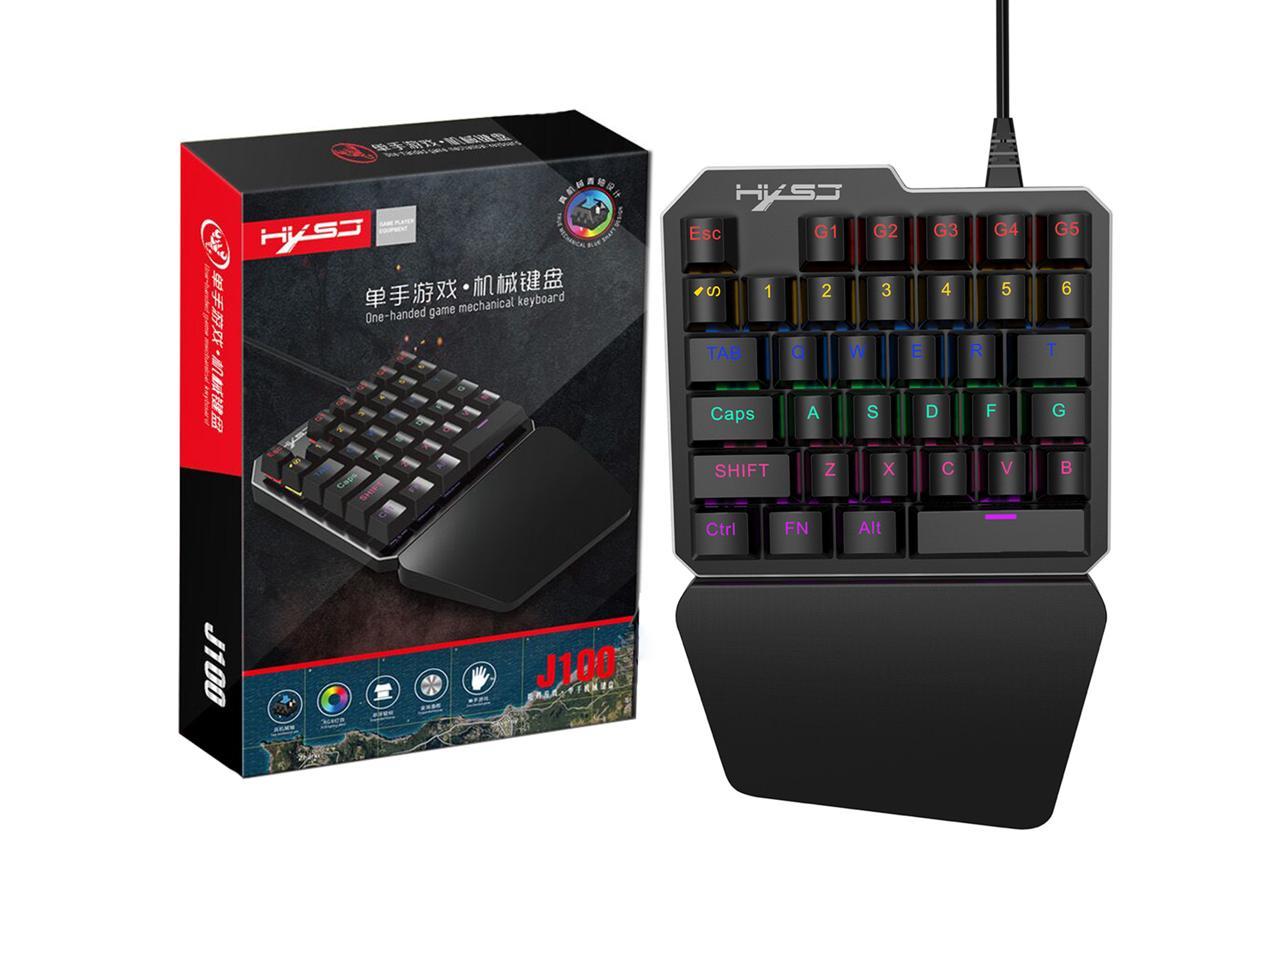 Mouse Combo HXSJ J50 Ergonomic Multicolor Backlight One-Handed Game Keyboard 